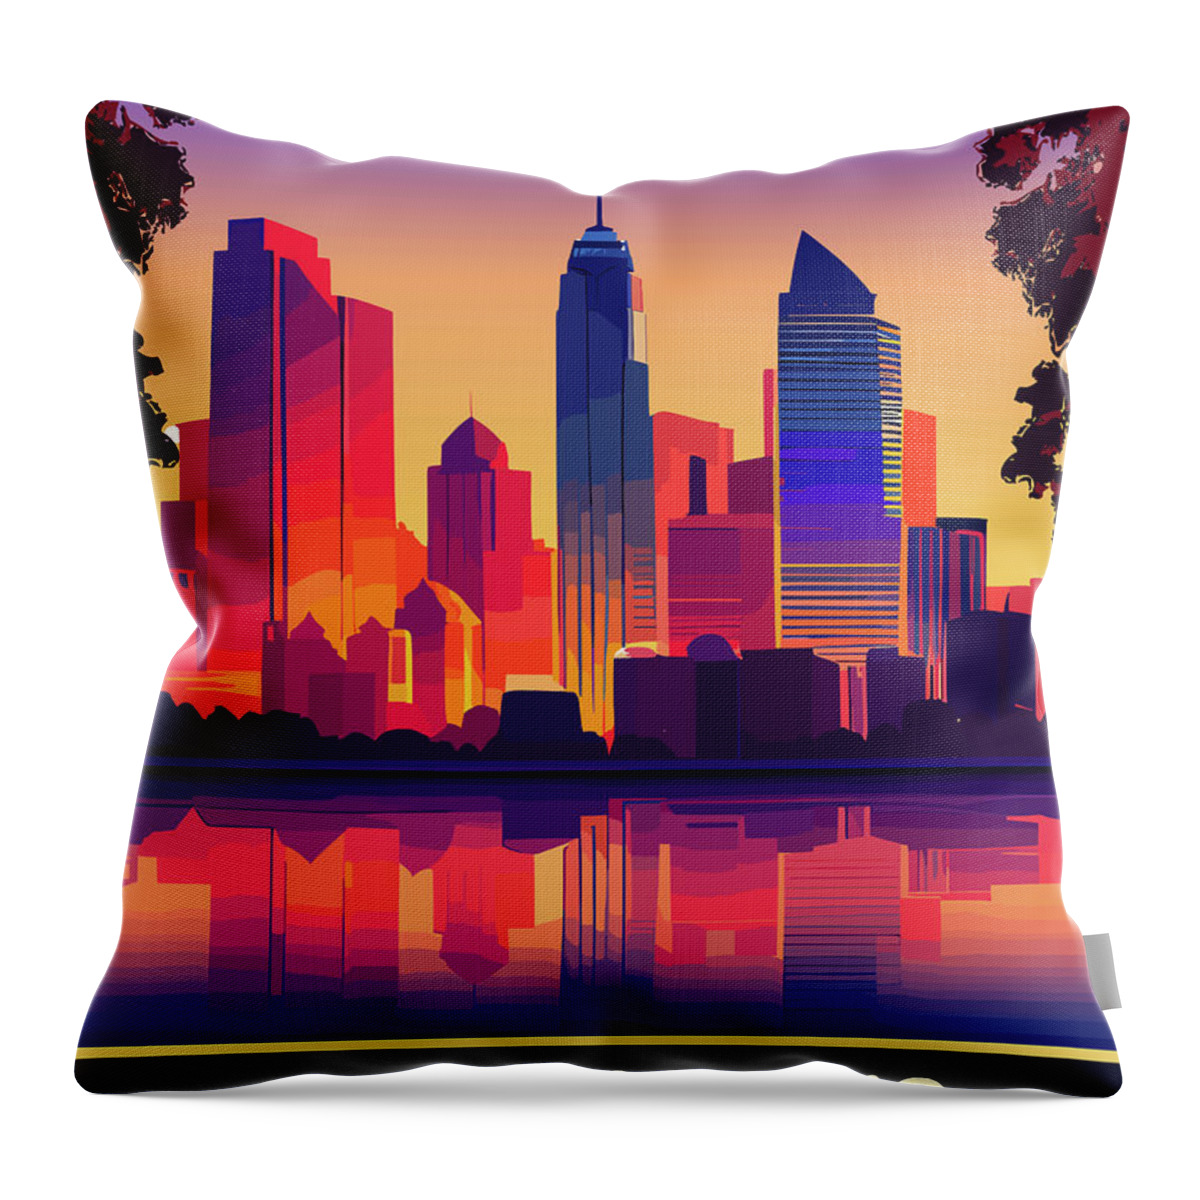 Minneapolis Throw Pillow featuring the digital art Minneapolis, Minnesota by Long Shot